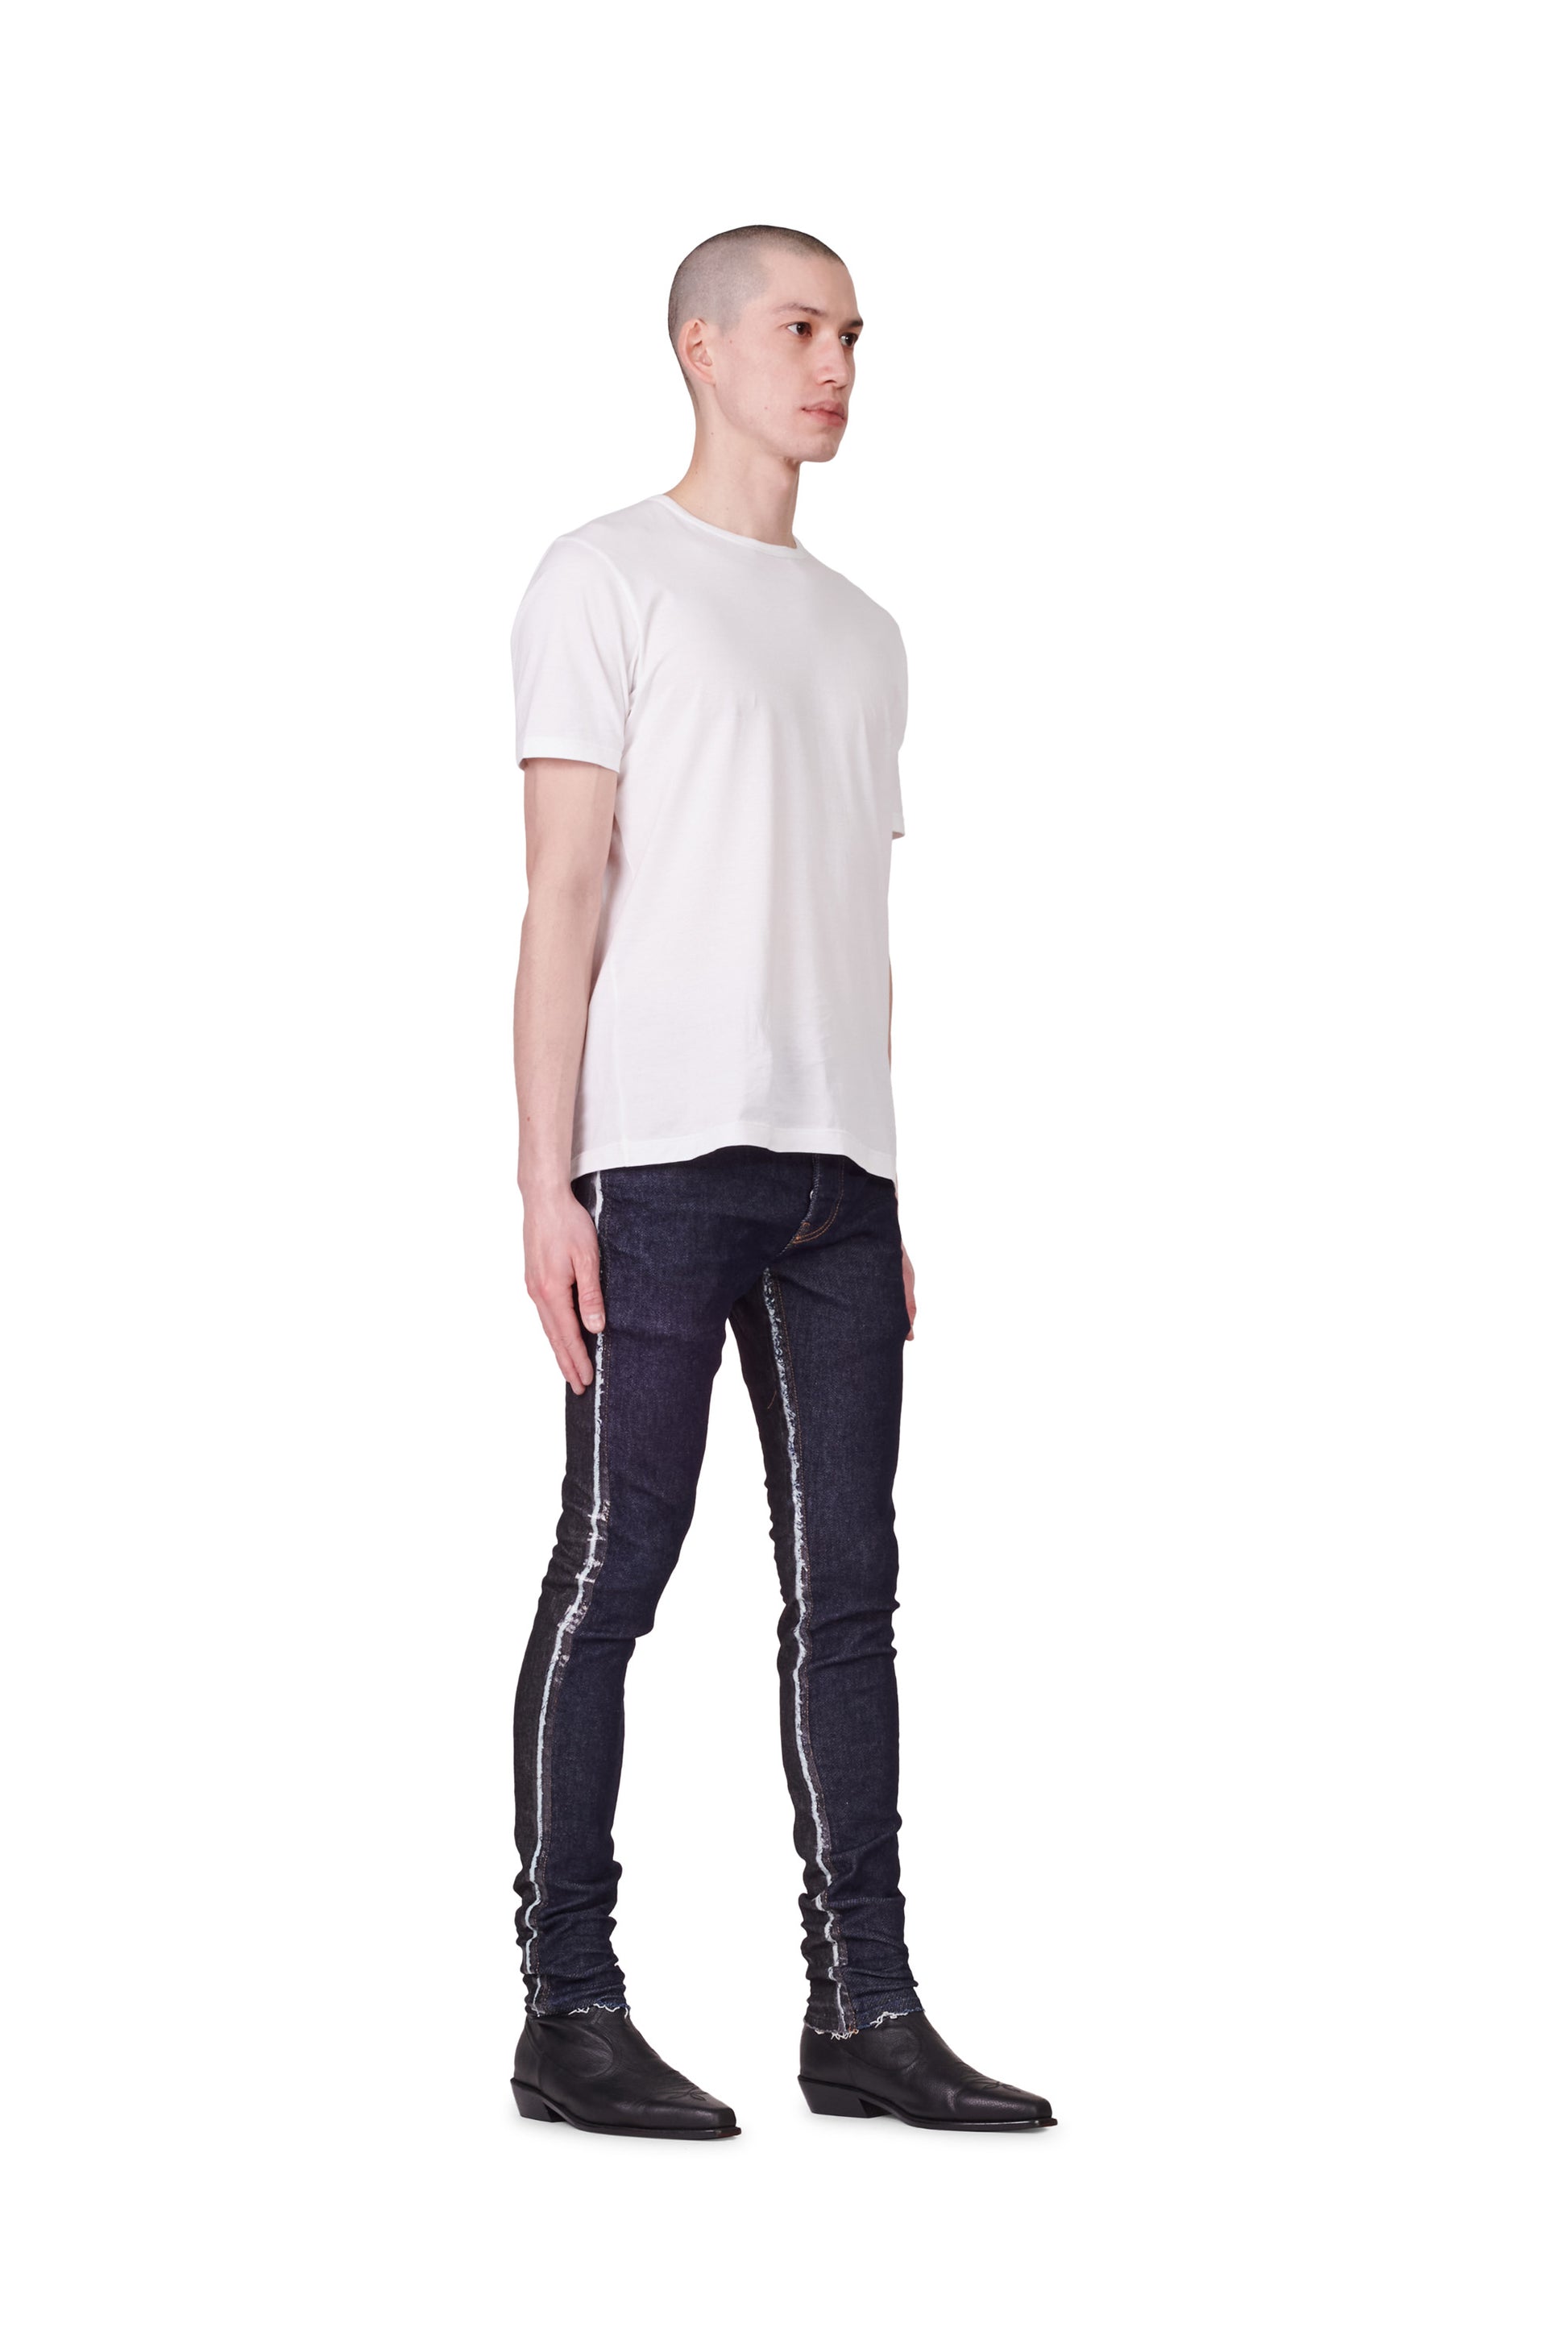 PURPLE BRAND - Men's Low Rise Skinny Jean - Style No. P001 - Raw Indigo Black Framis Fray - Model Side Pose